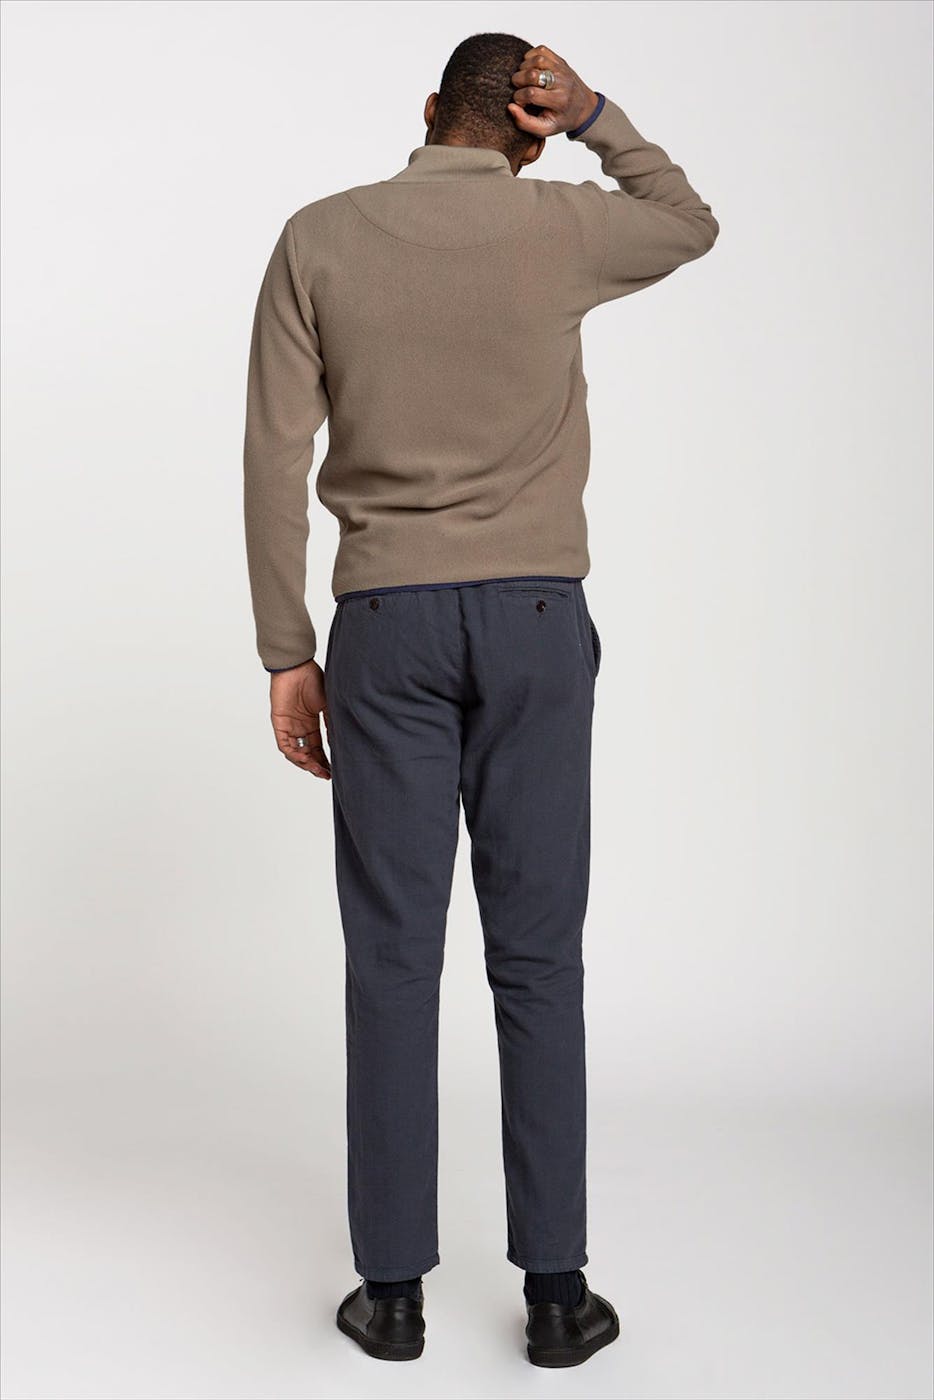 OLOW - Kaki Sweat Boreal fleece sweater